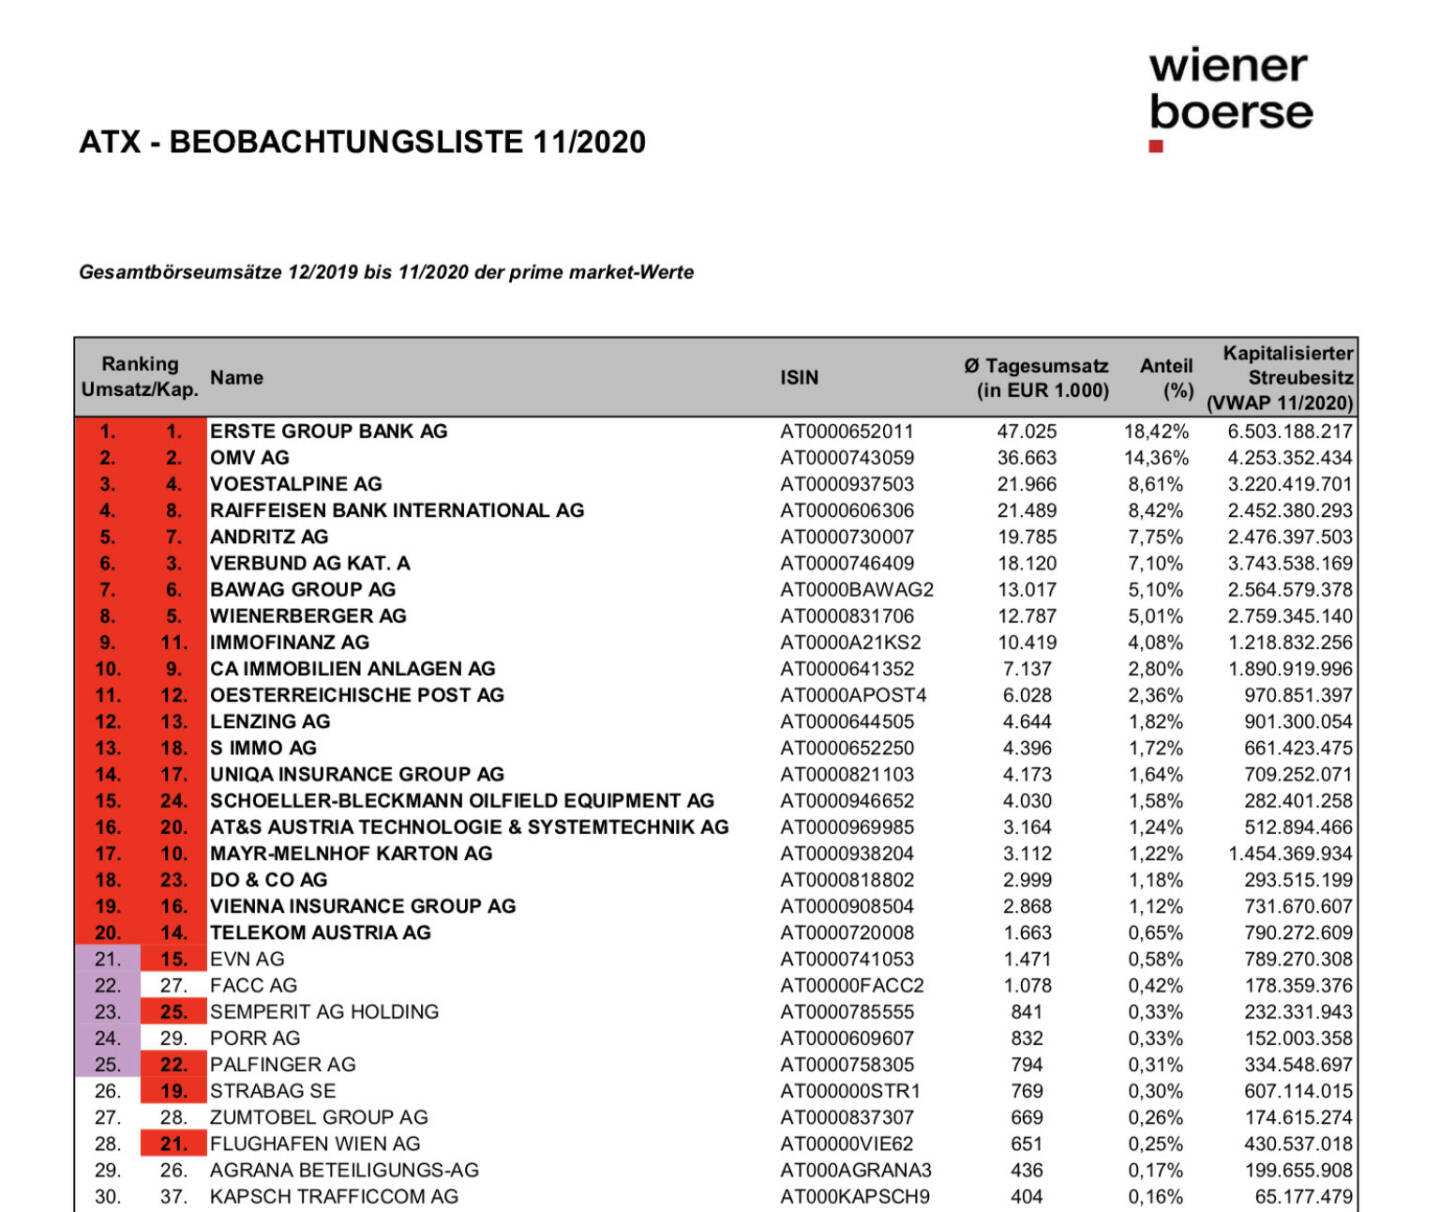 ATX-Beobachtungsliste 11/2020 (c) Wiener Börse